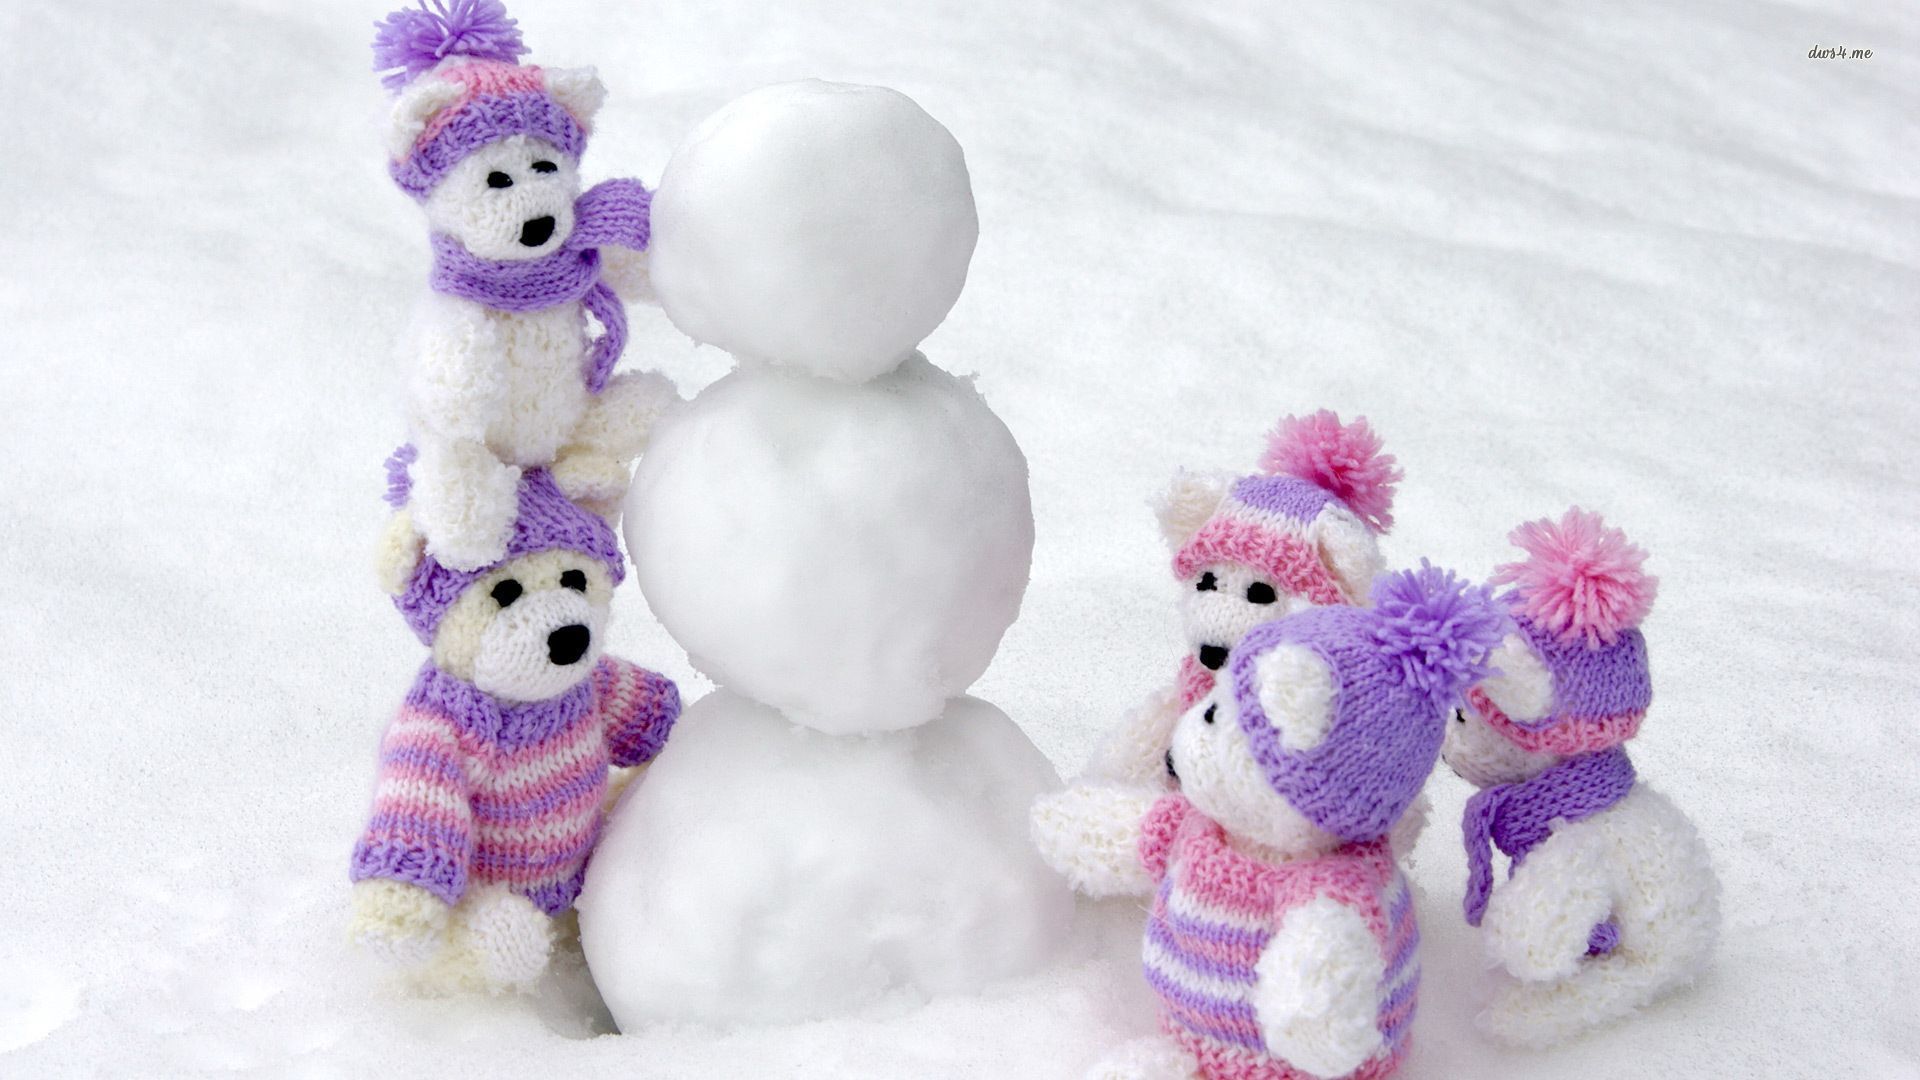 Cute Teddy Bear By The Snowman - Afise Campanii , HD Wallpaper & Backgrounds